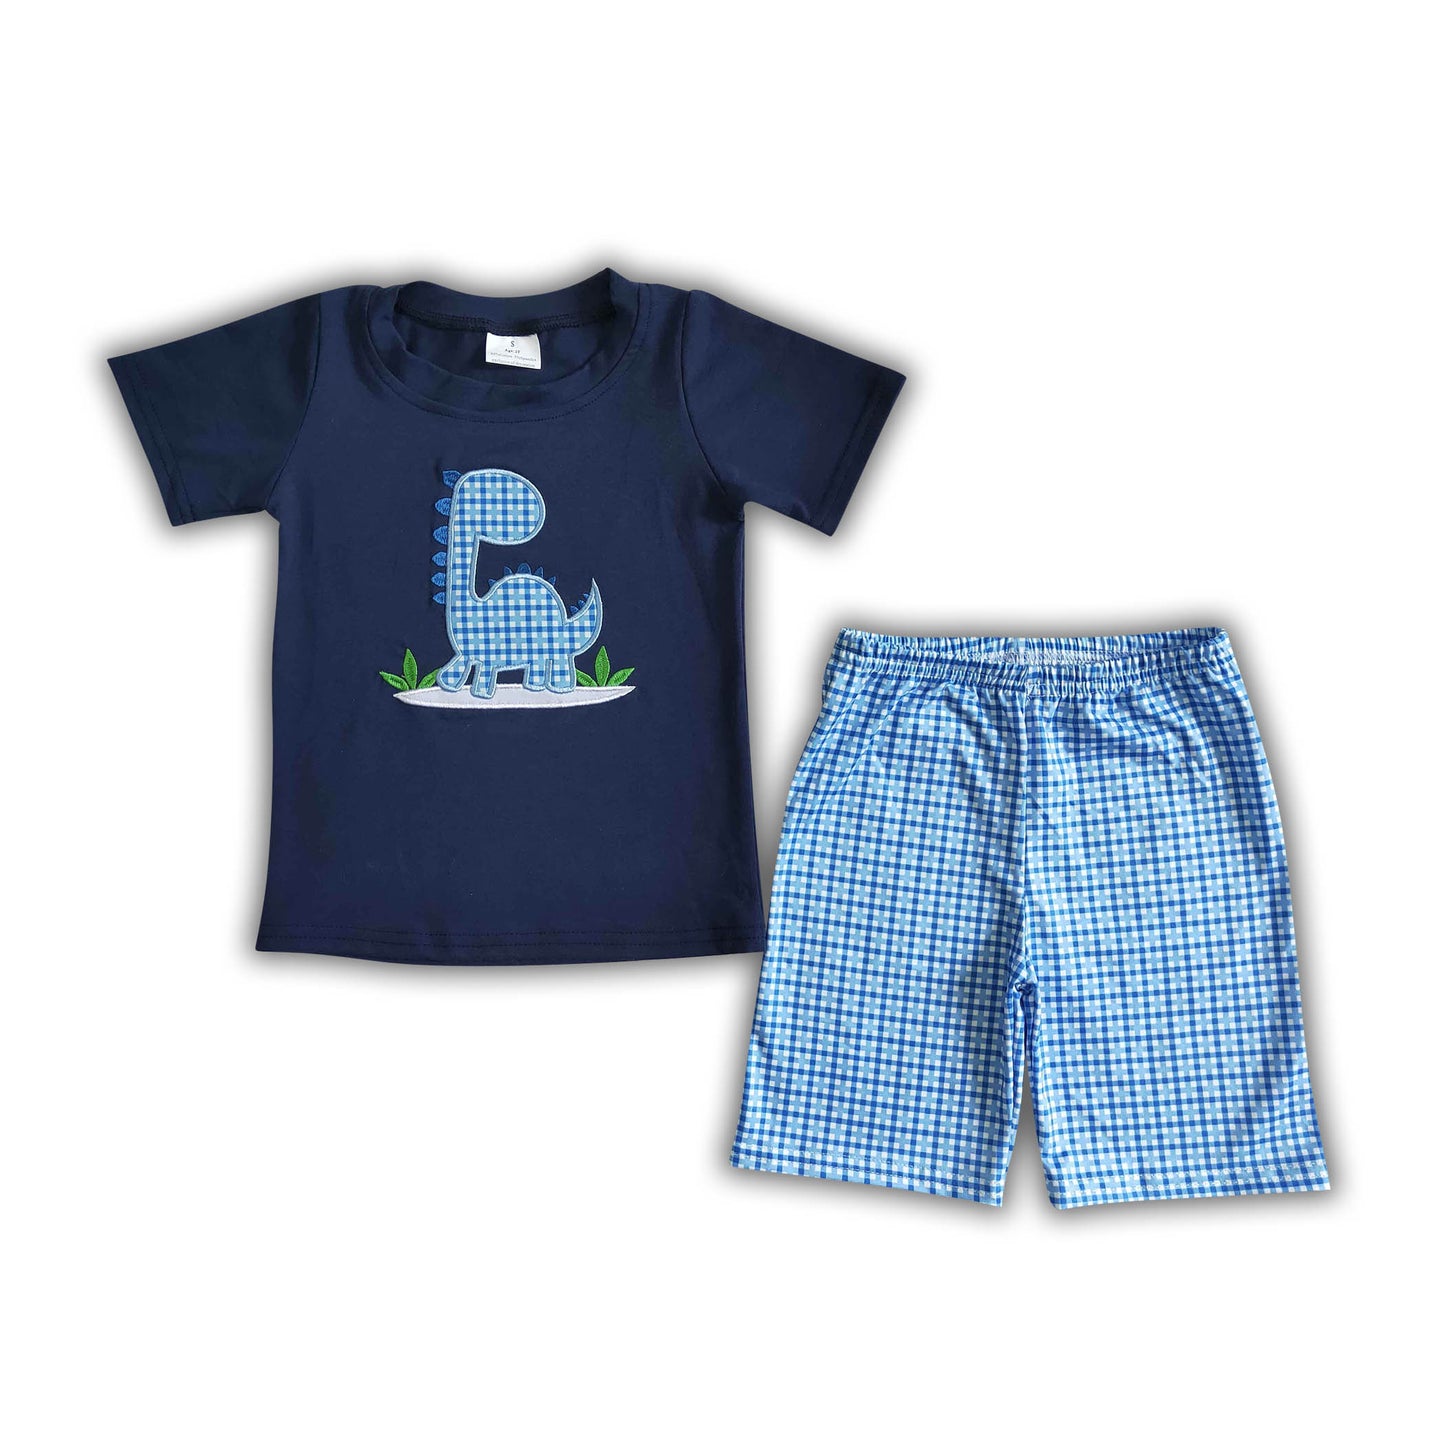 Dinosaur embroidery boy summer clothing set